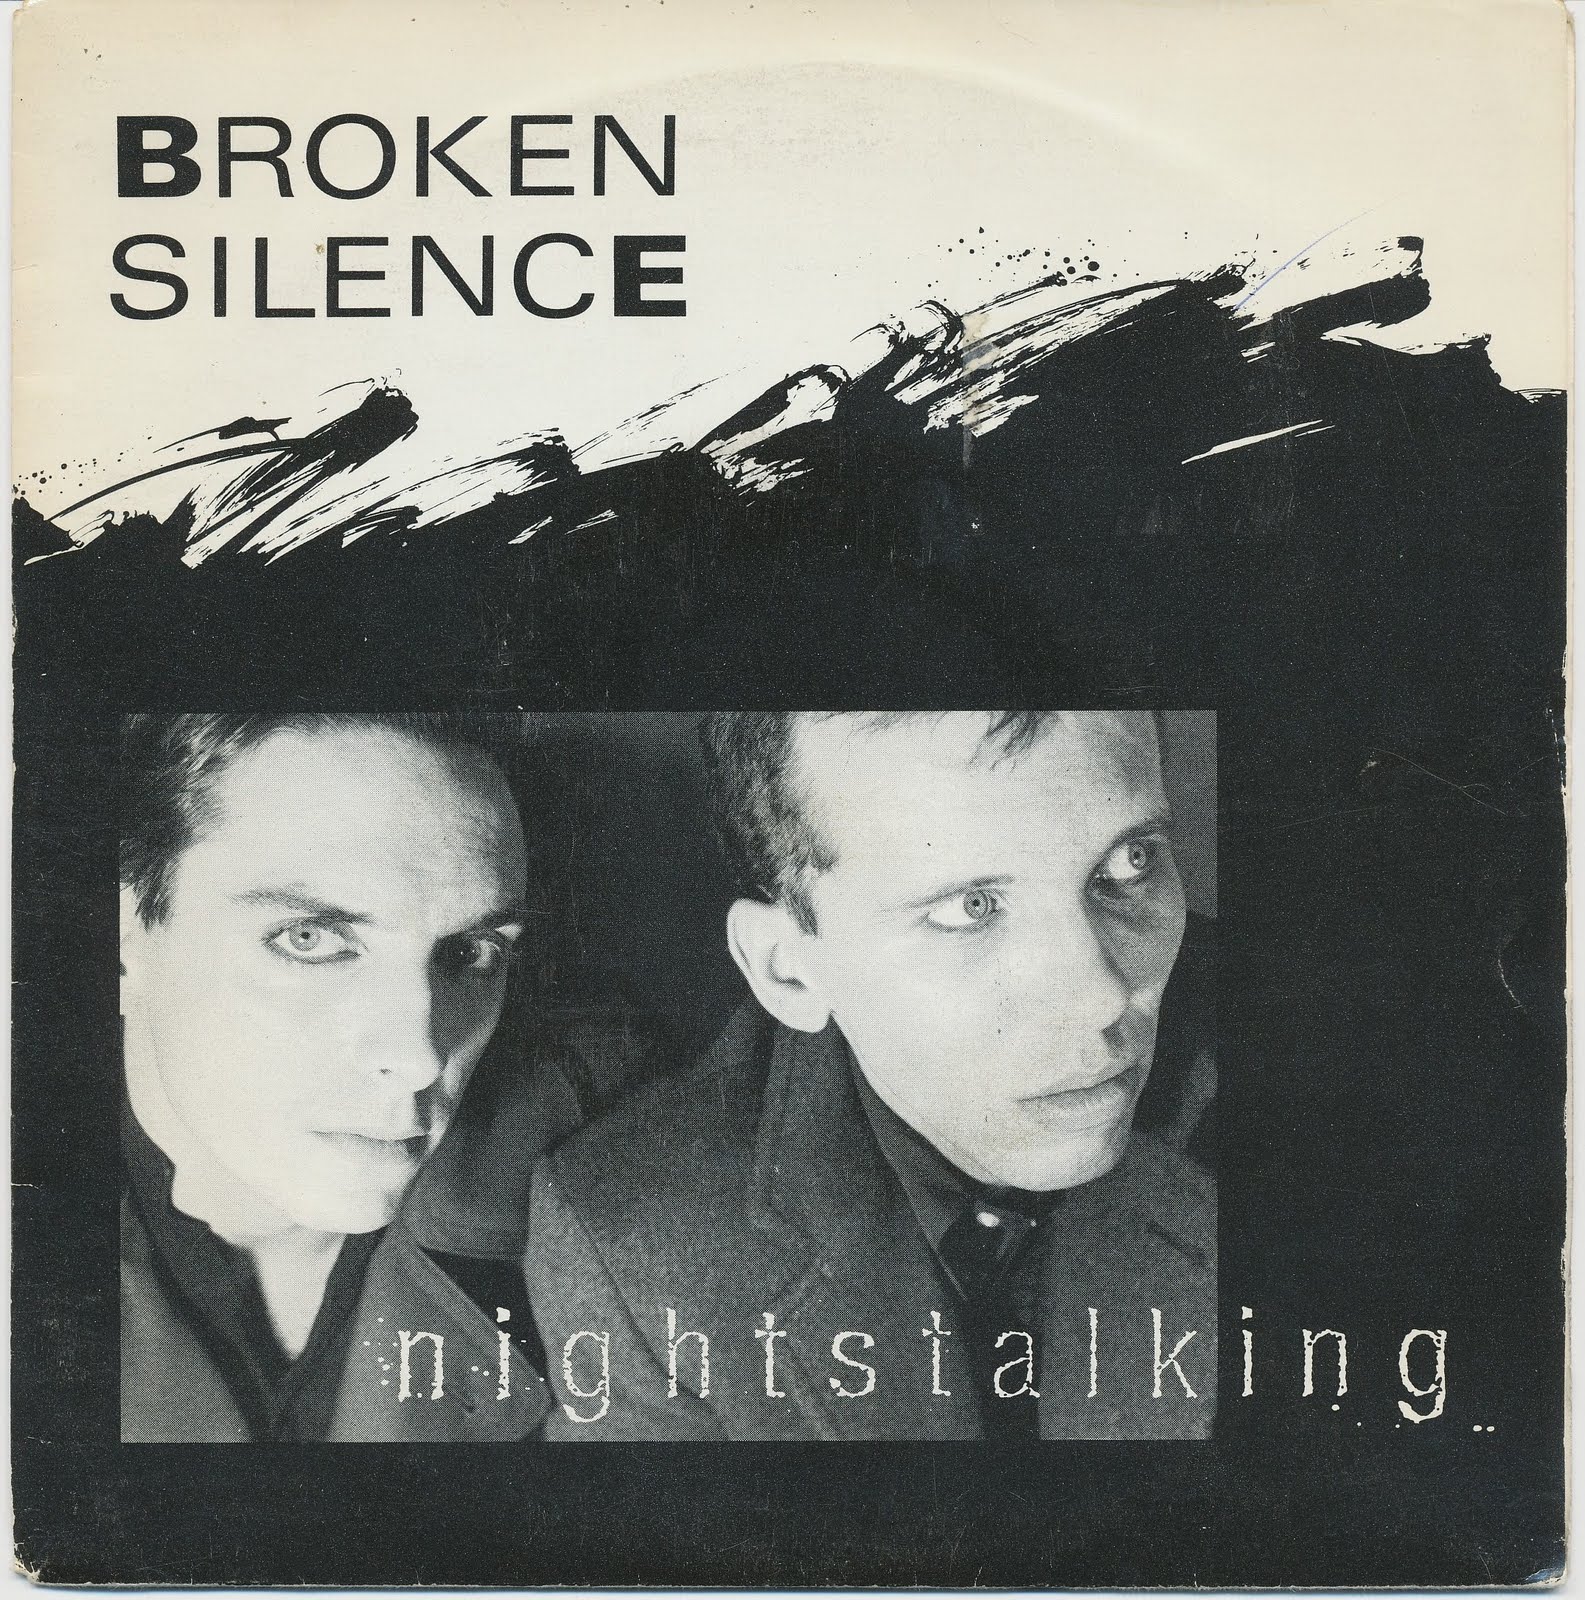 A broken Silence. A broken Silence группа. Песня is broken Silence. This broken Silence. Песни ночь и тишина данная навек